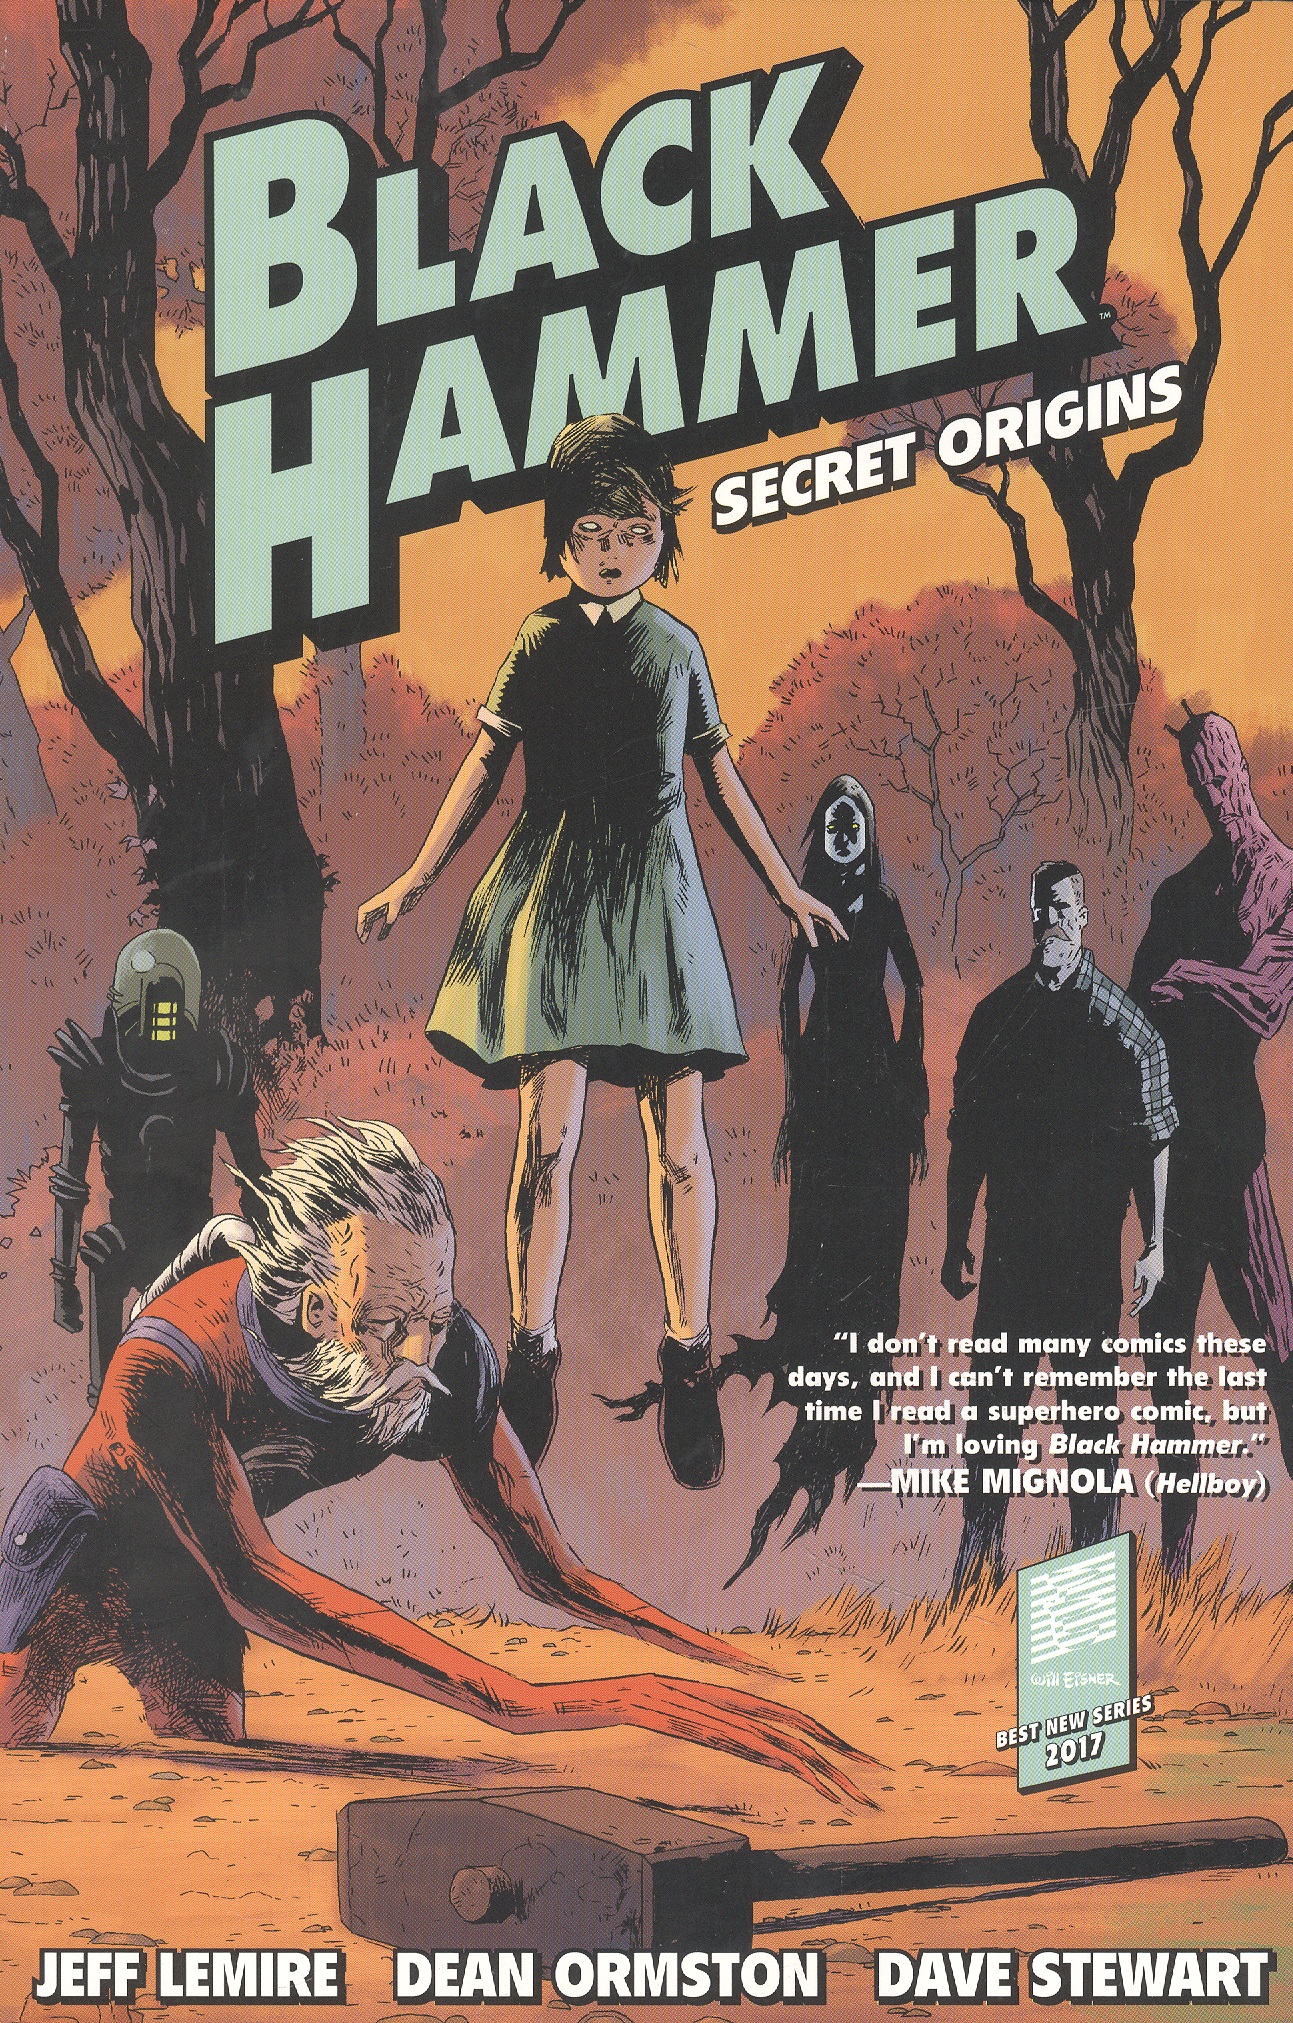 Лемир Джефф Black Hammer: Secret Origins lemire jeff yarsky caitlin black hammer volume 5 reborn part one